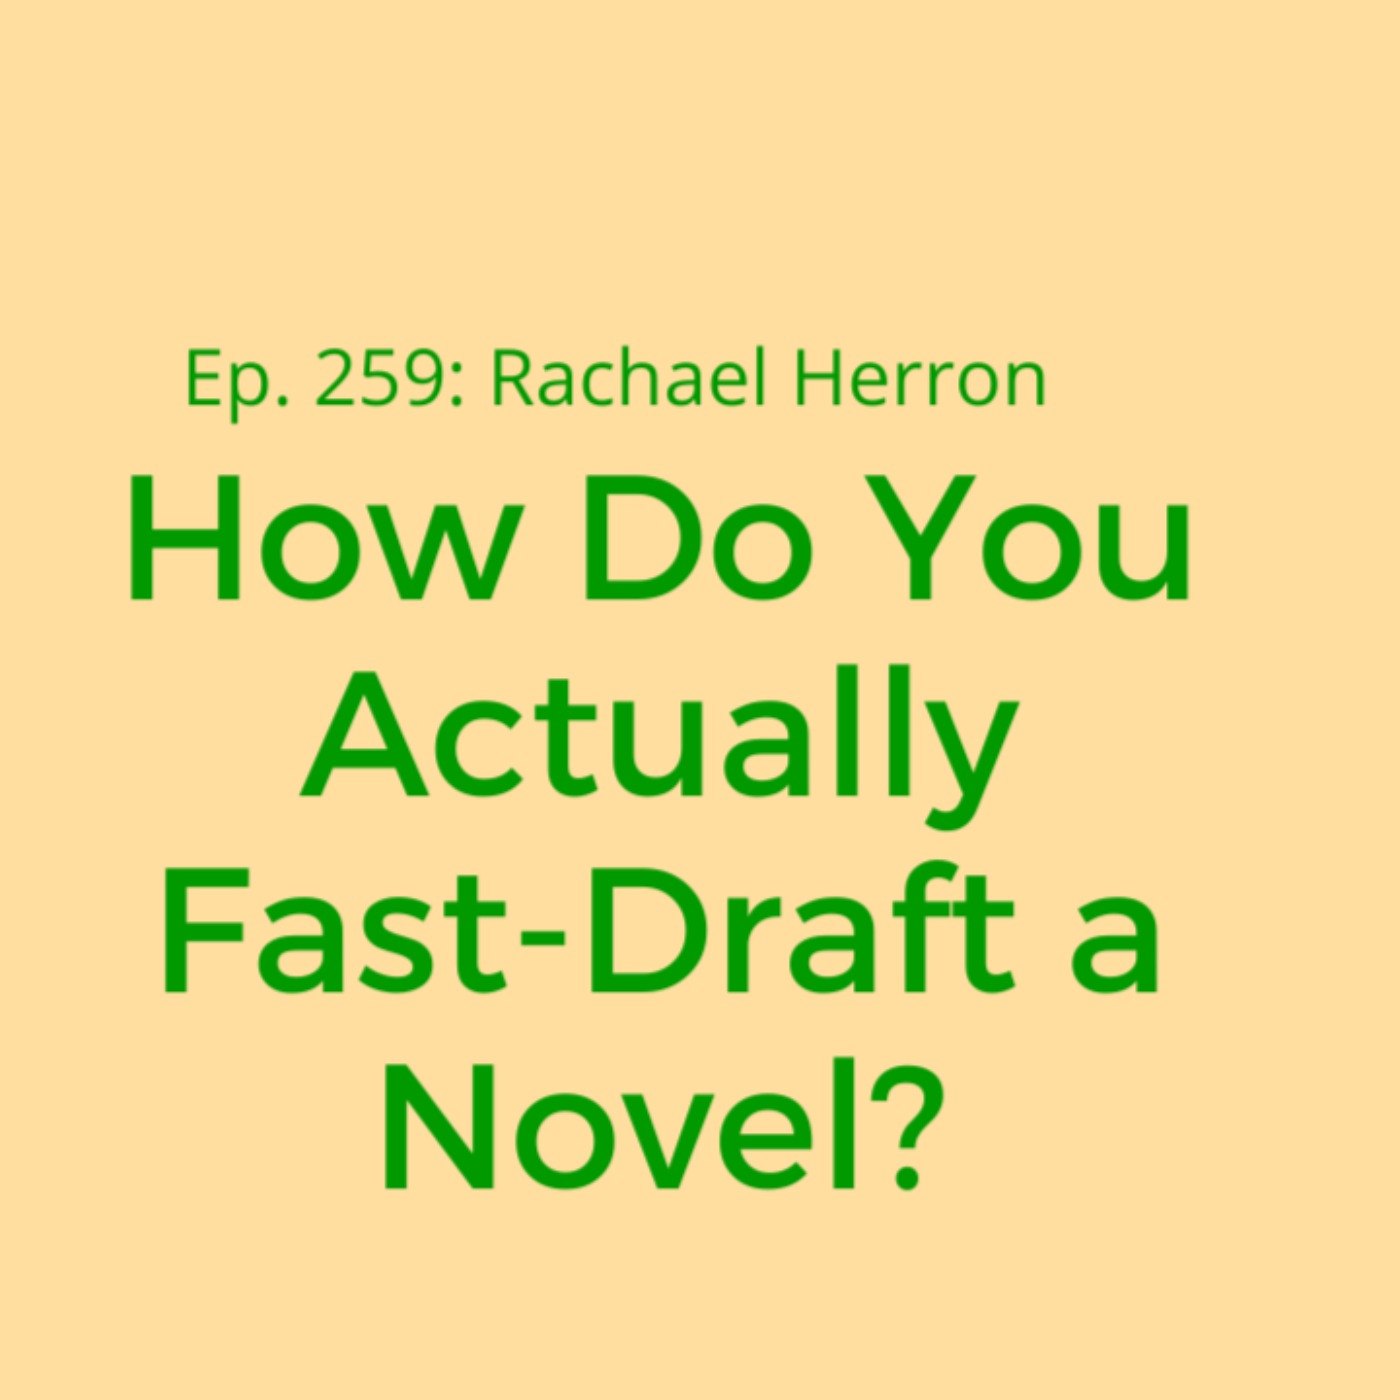 Ep. 259: How Do You Actually Fast-Draft a Novel? Bonus MiniEpisode